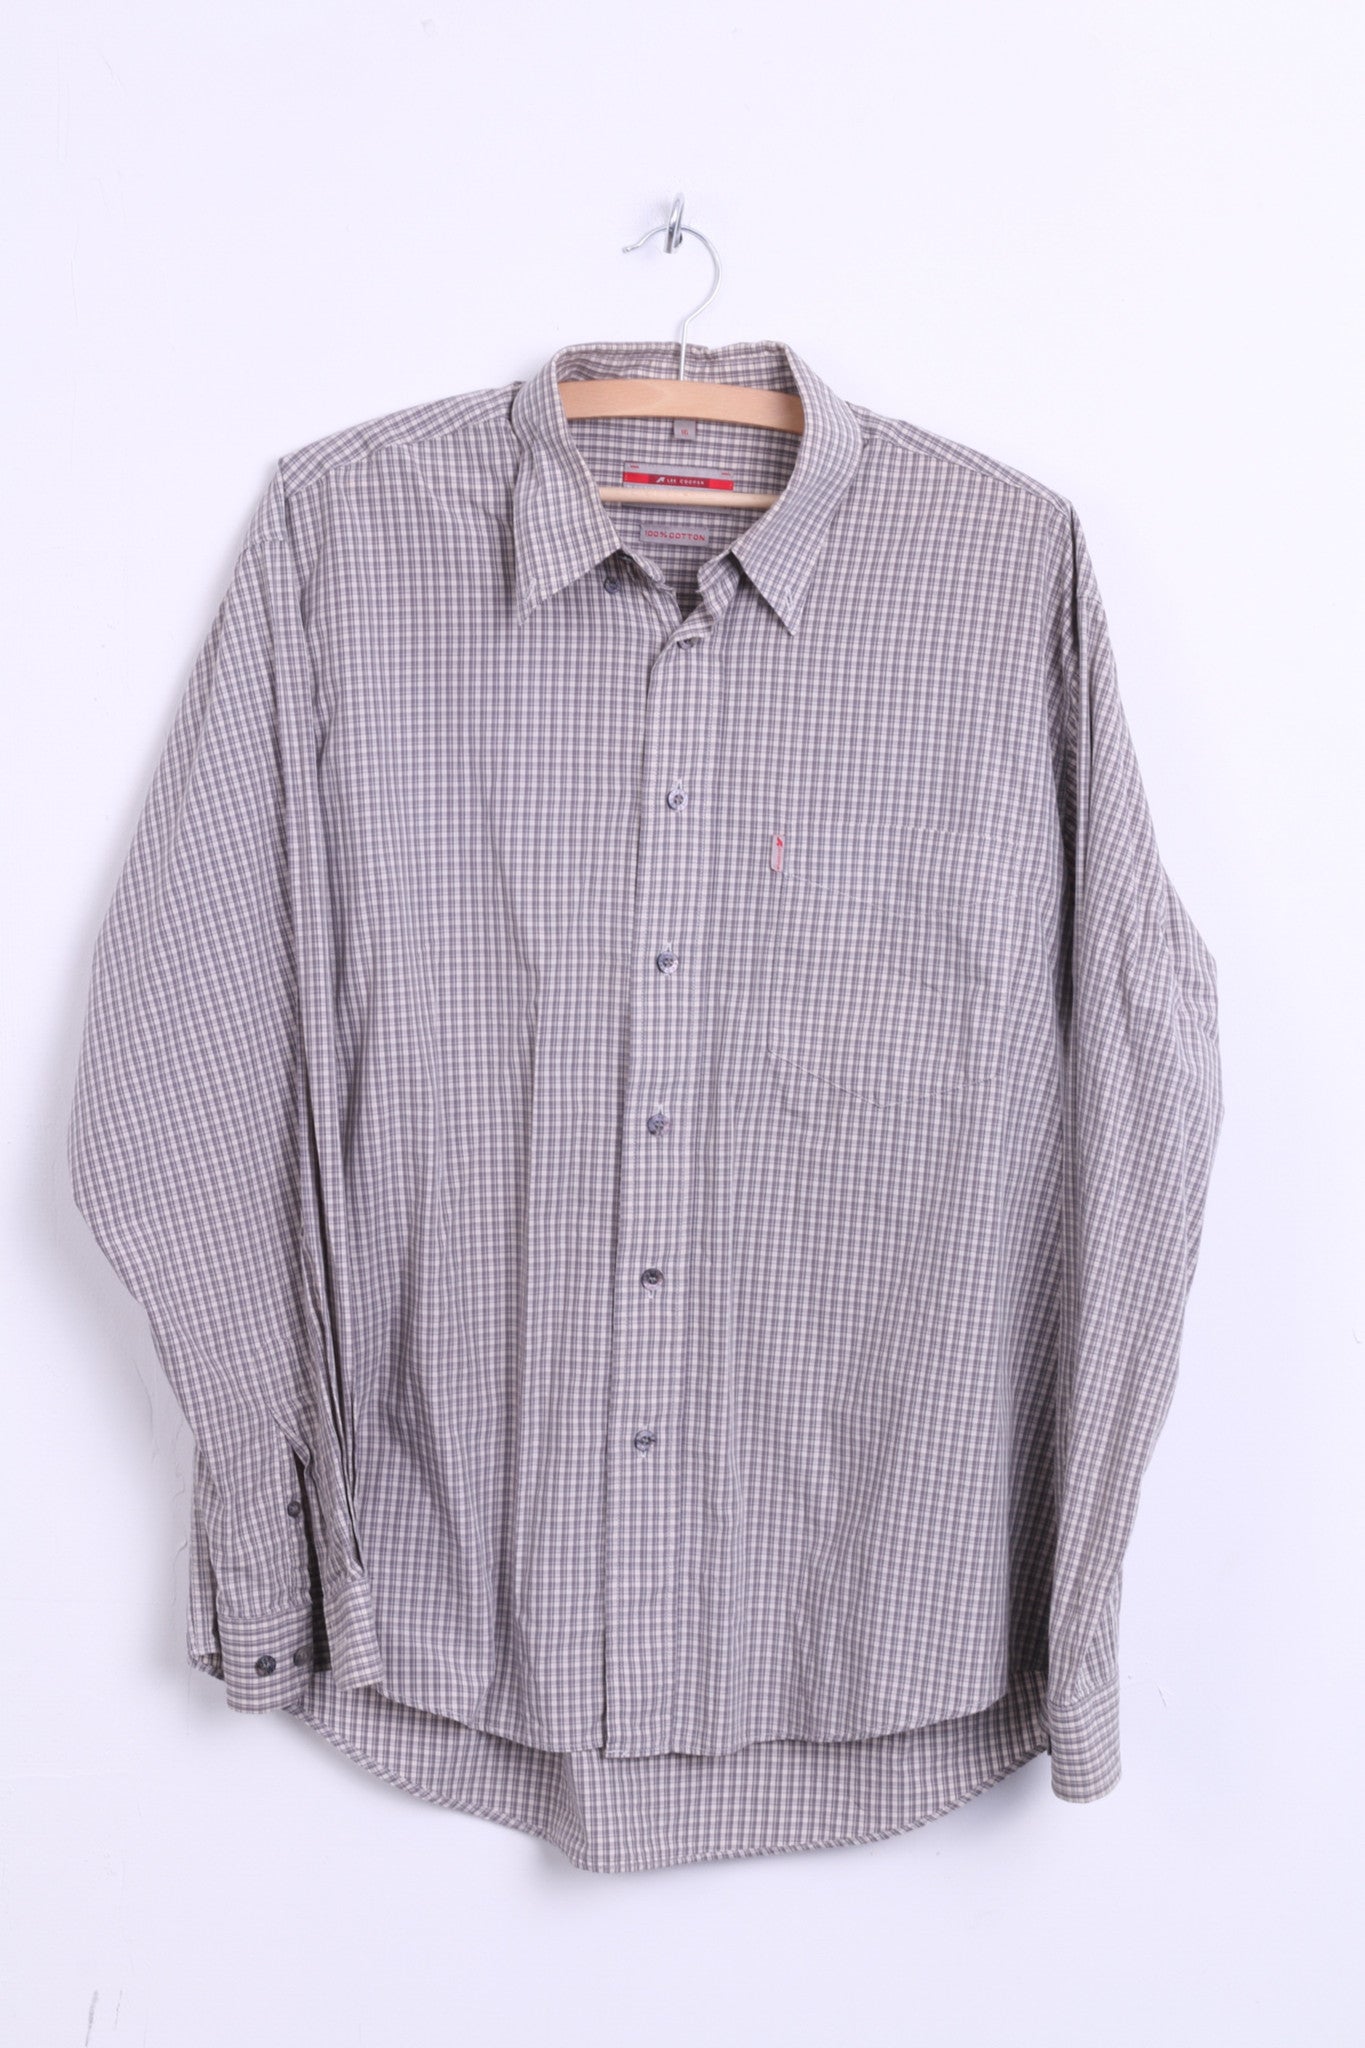 Lee Cooper Mens 16 XL Casual Shirt Check Cotton Top Grey Beige - RetrospectClothes